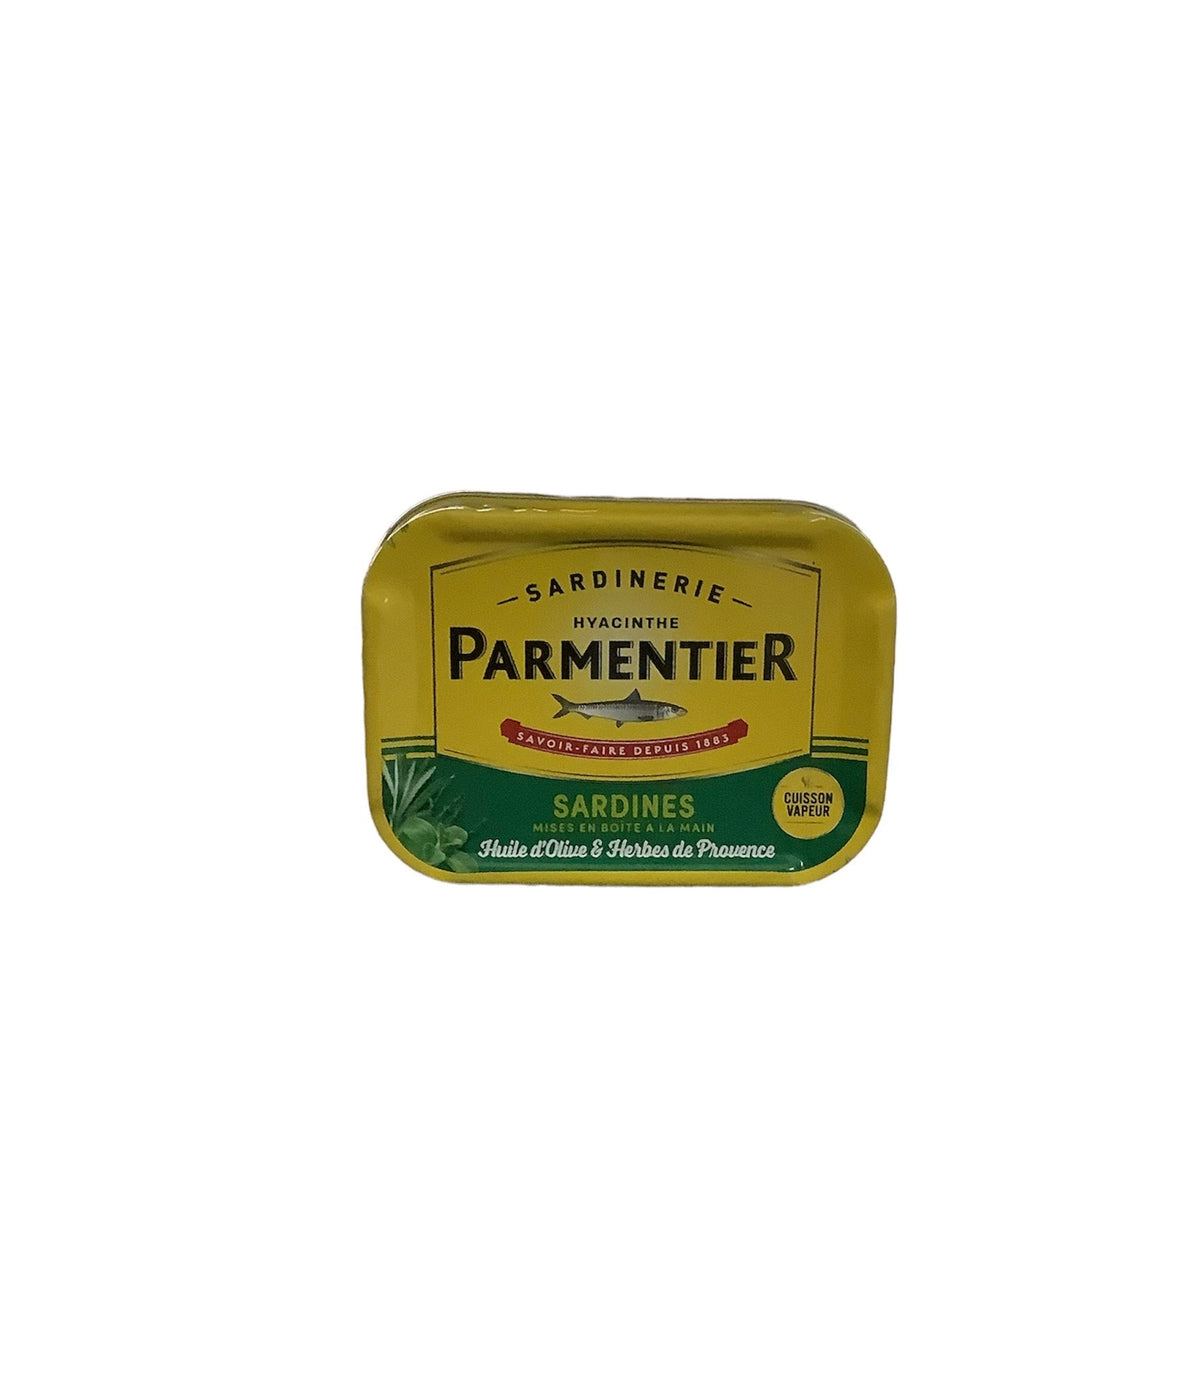 Sardines Parmentier herbes Provence 135g -C20